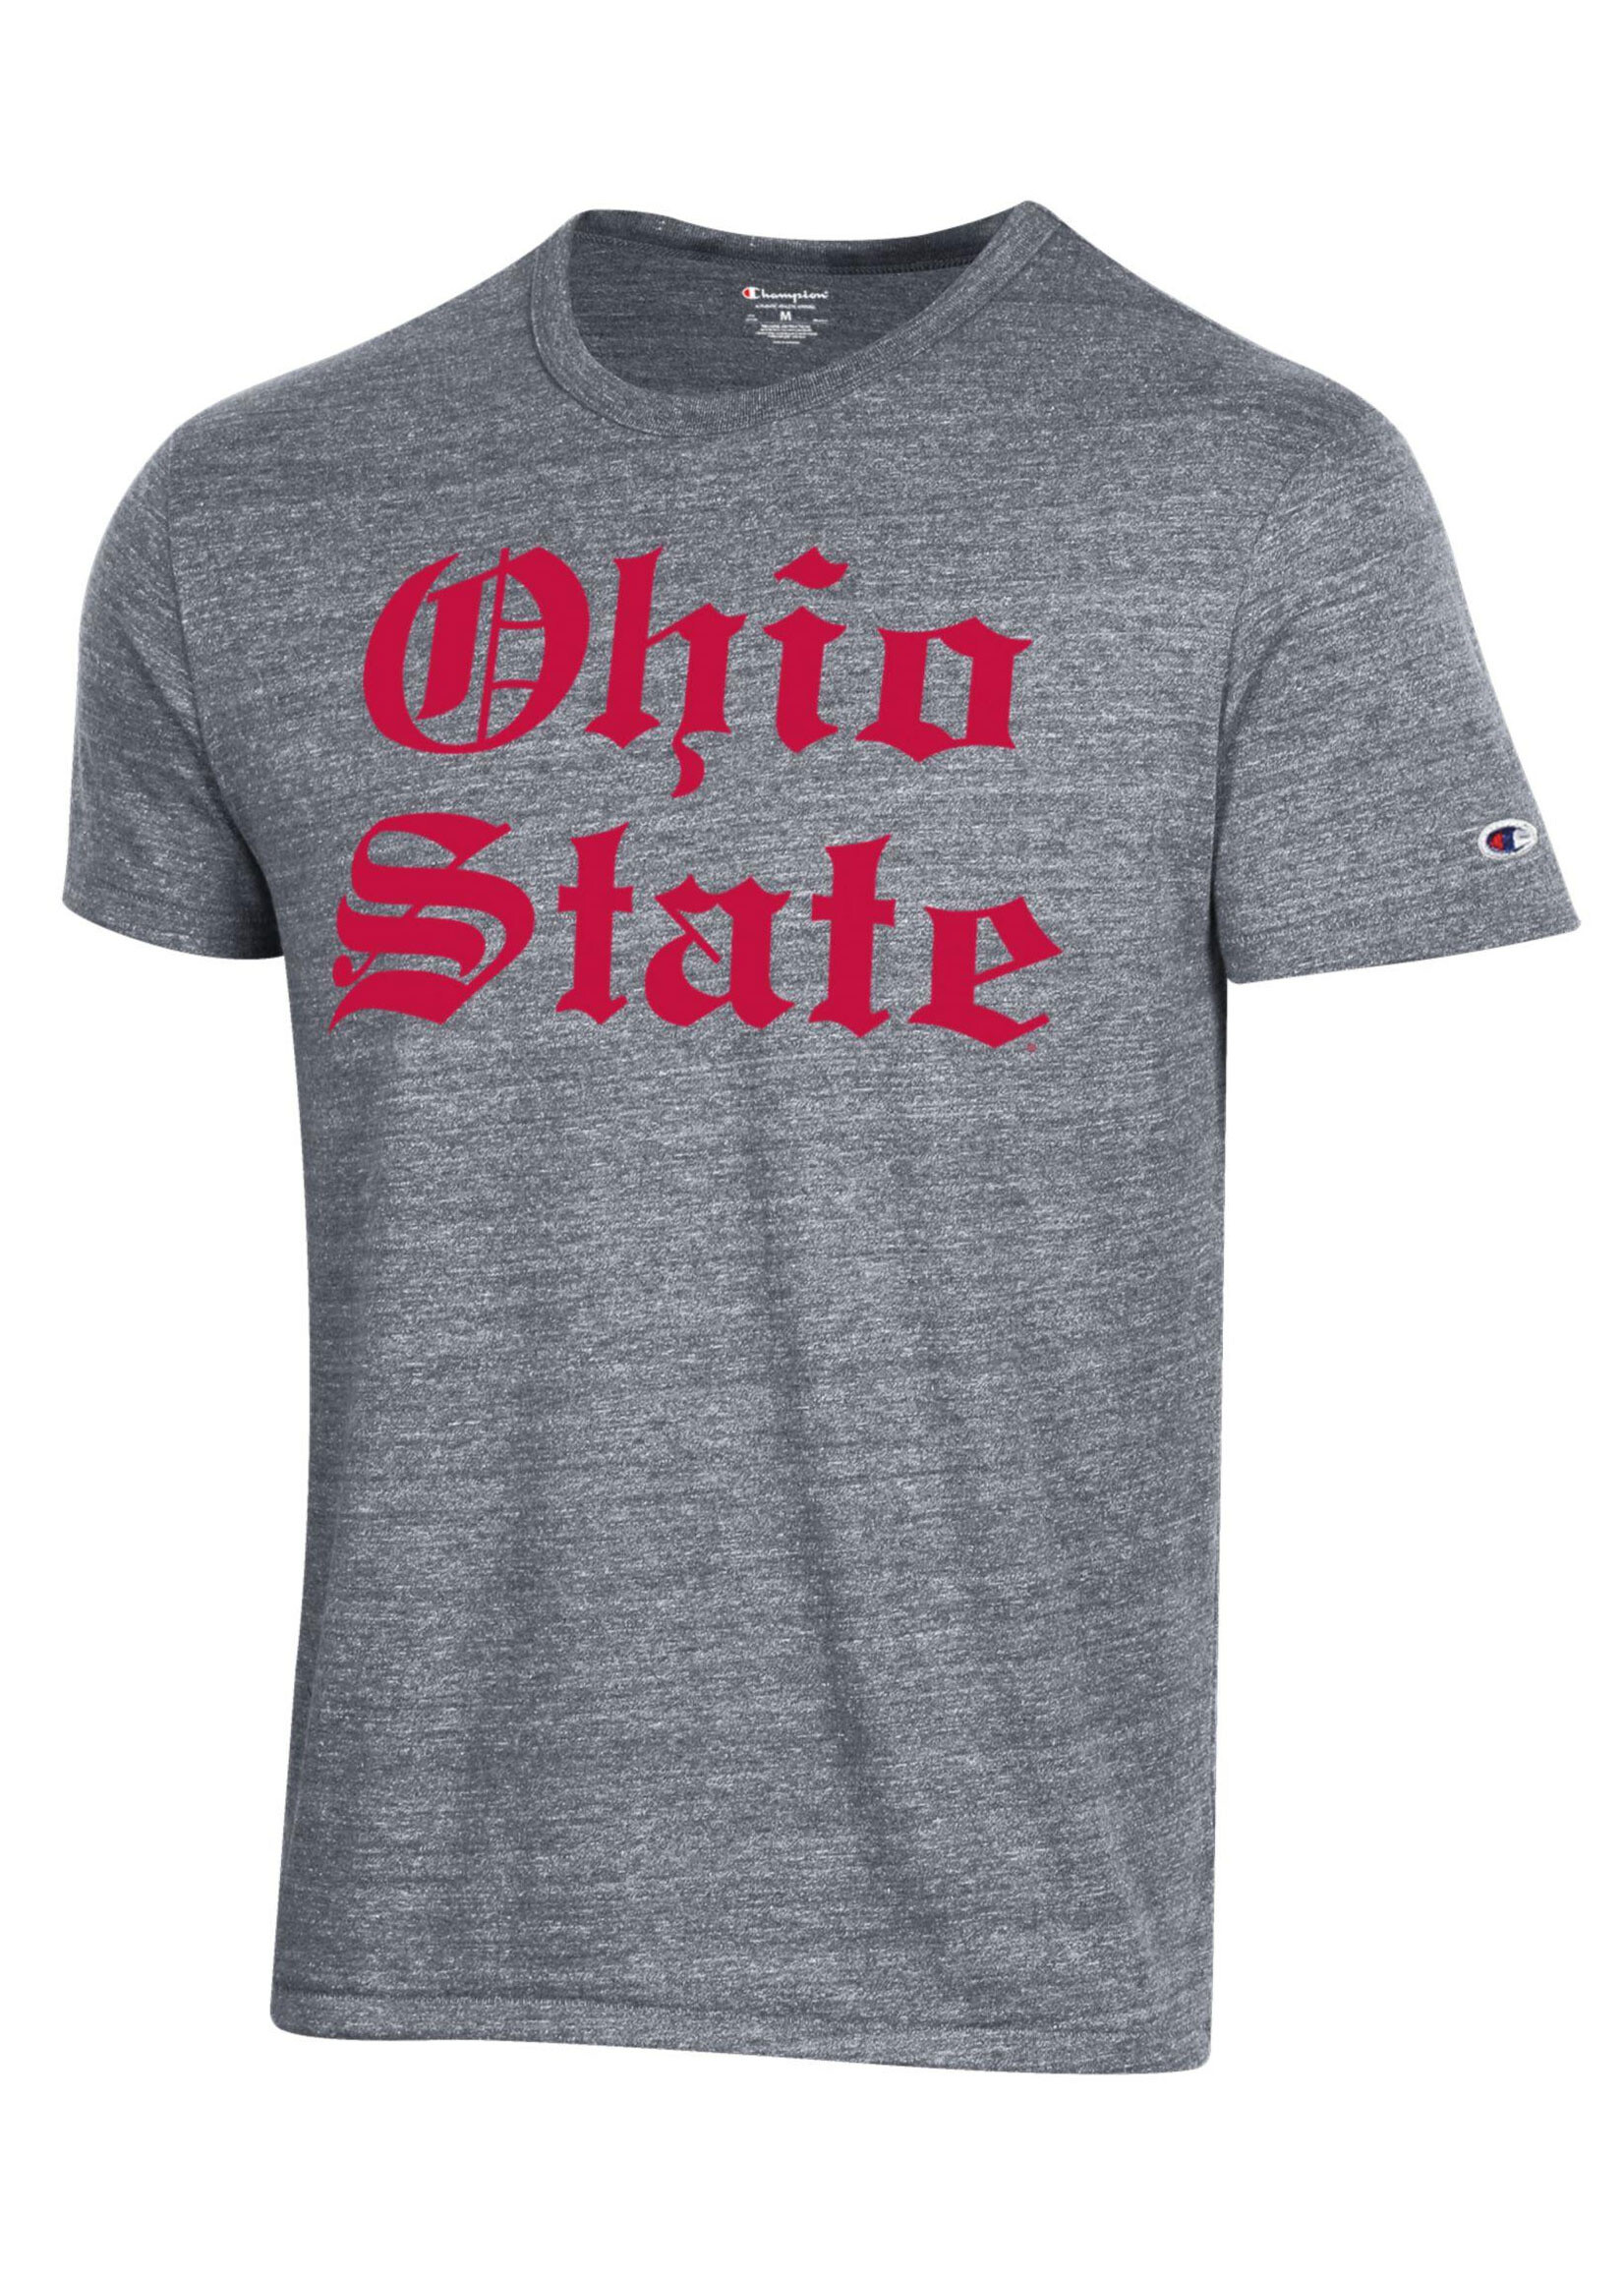 Ohio State Buckeyes Old English Tri-Blend T-Shirt